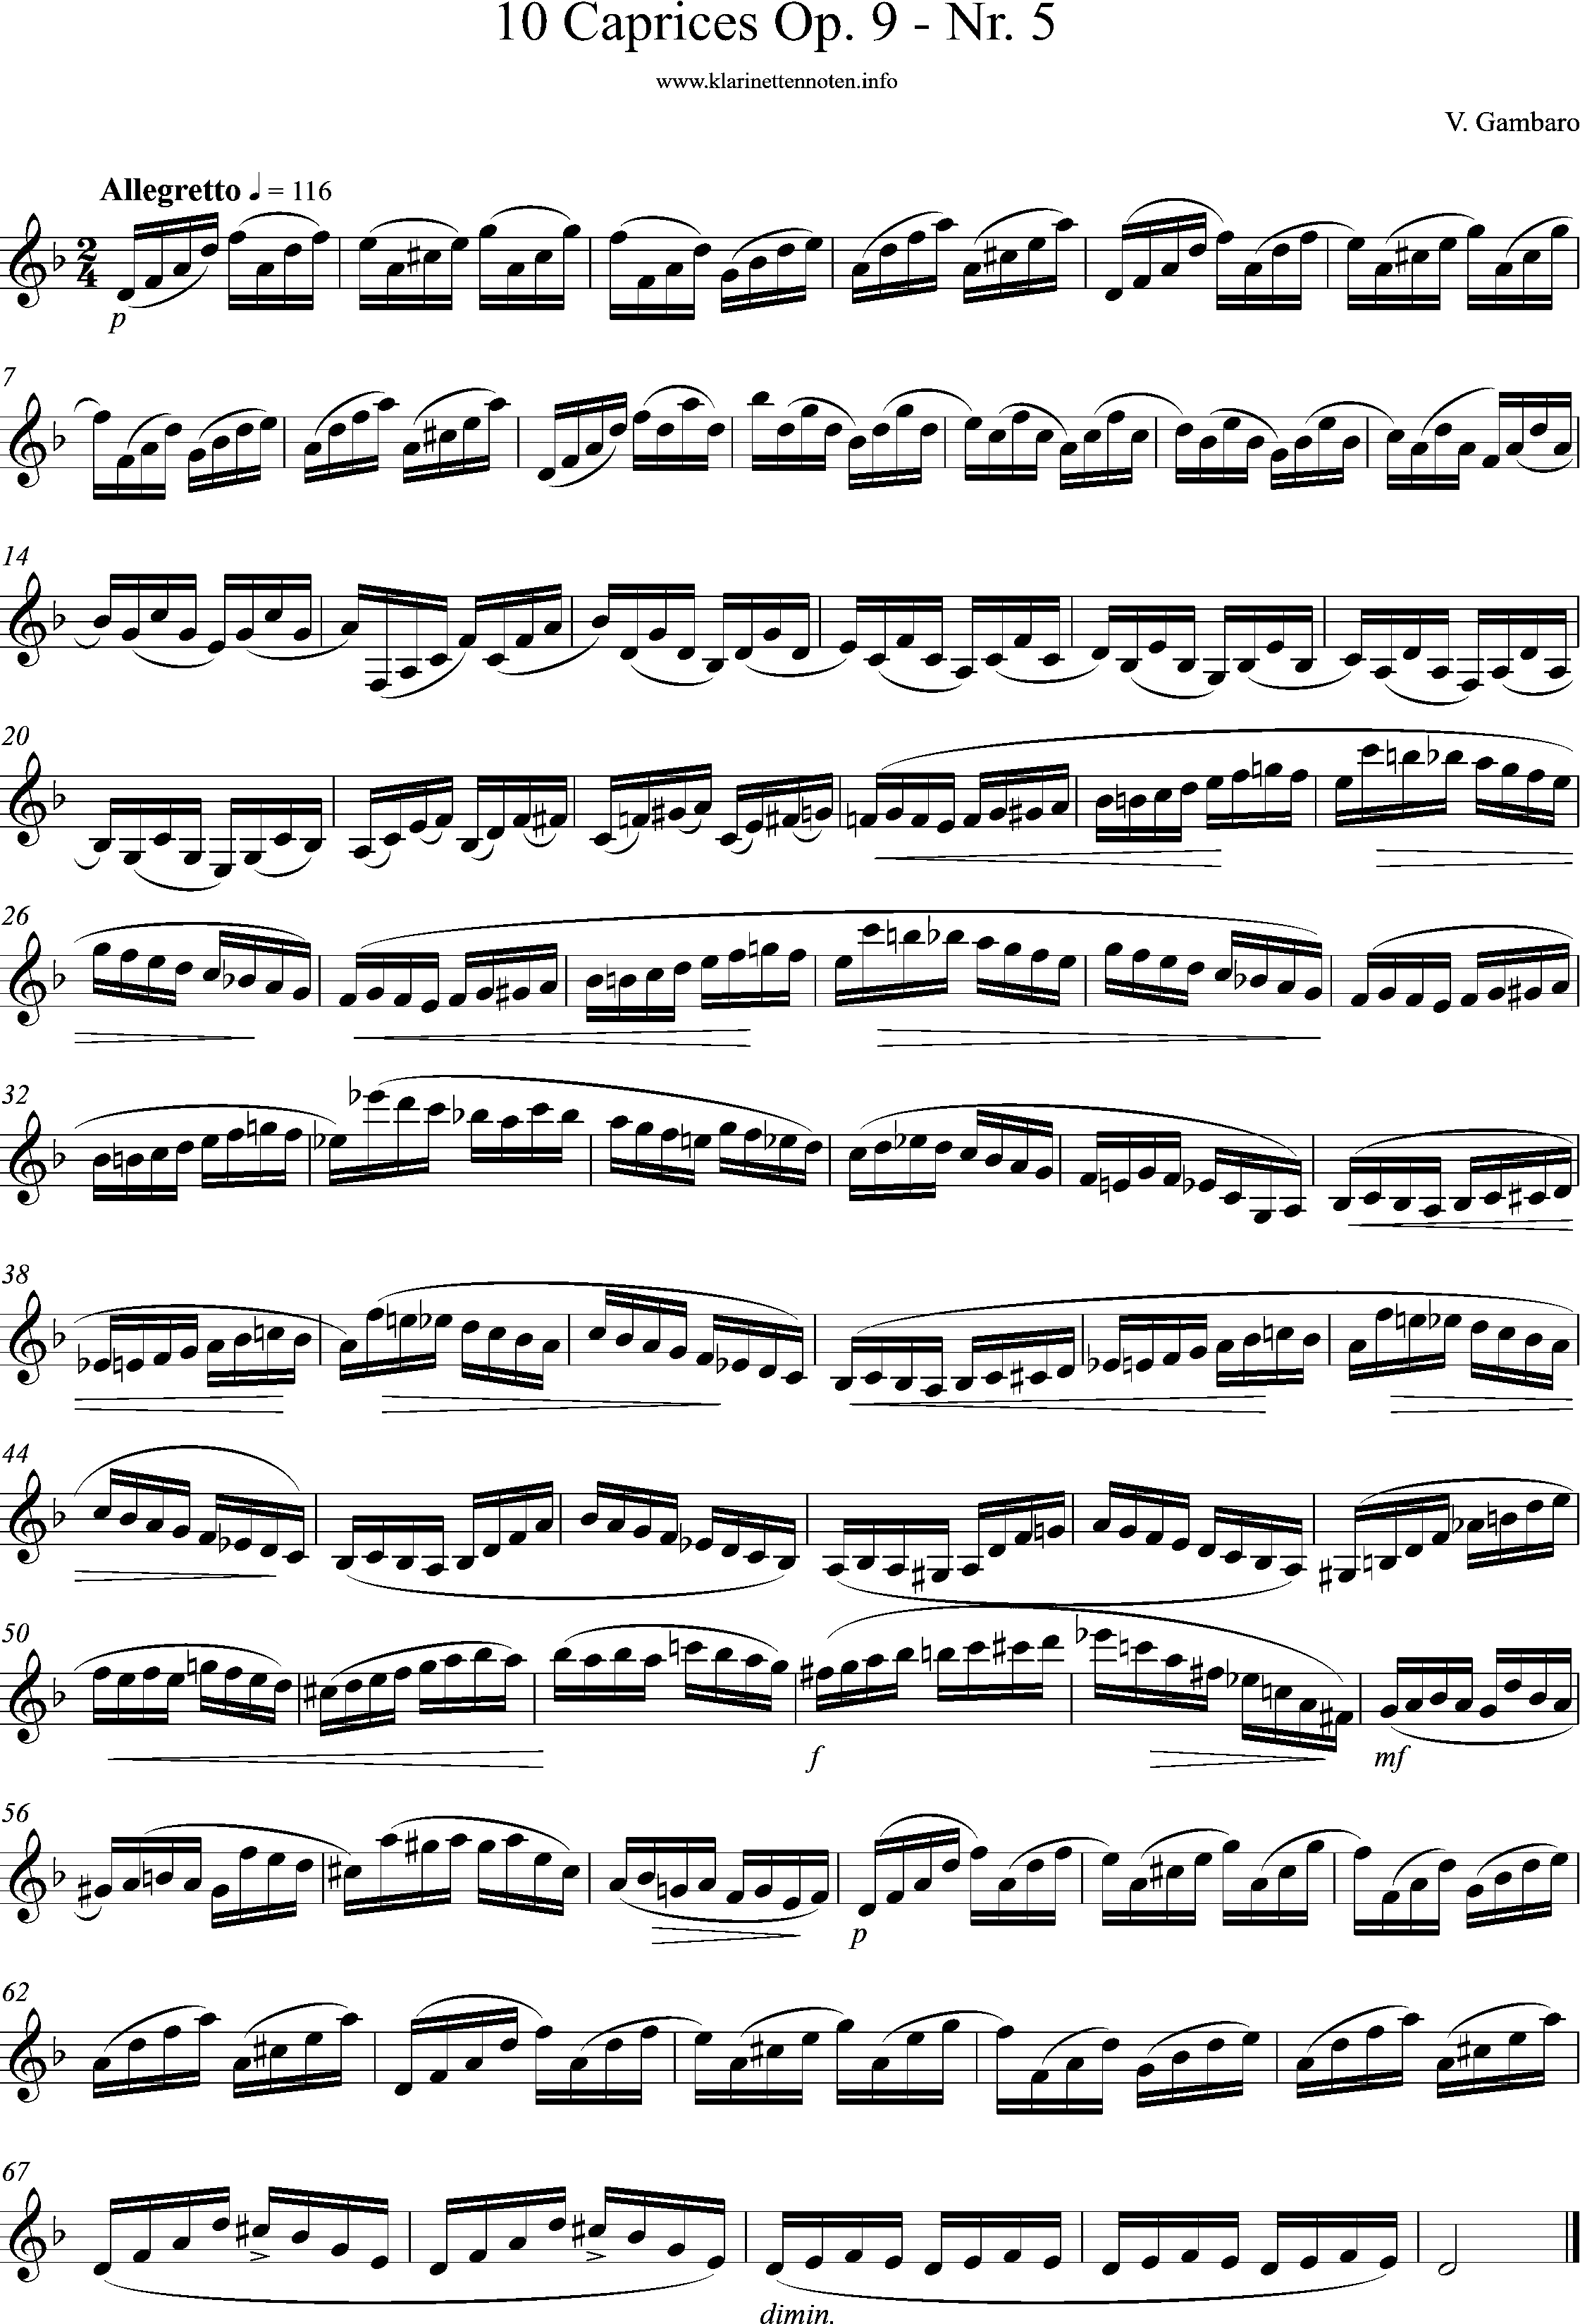 10 Caprices,op. 9, Gambaro No. 5